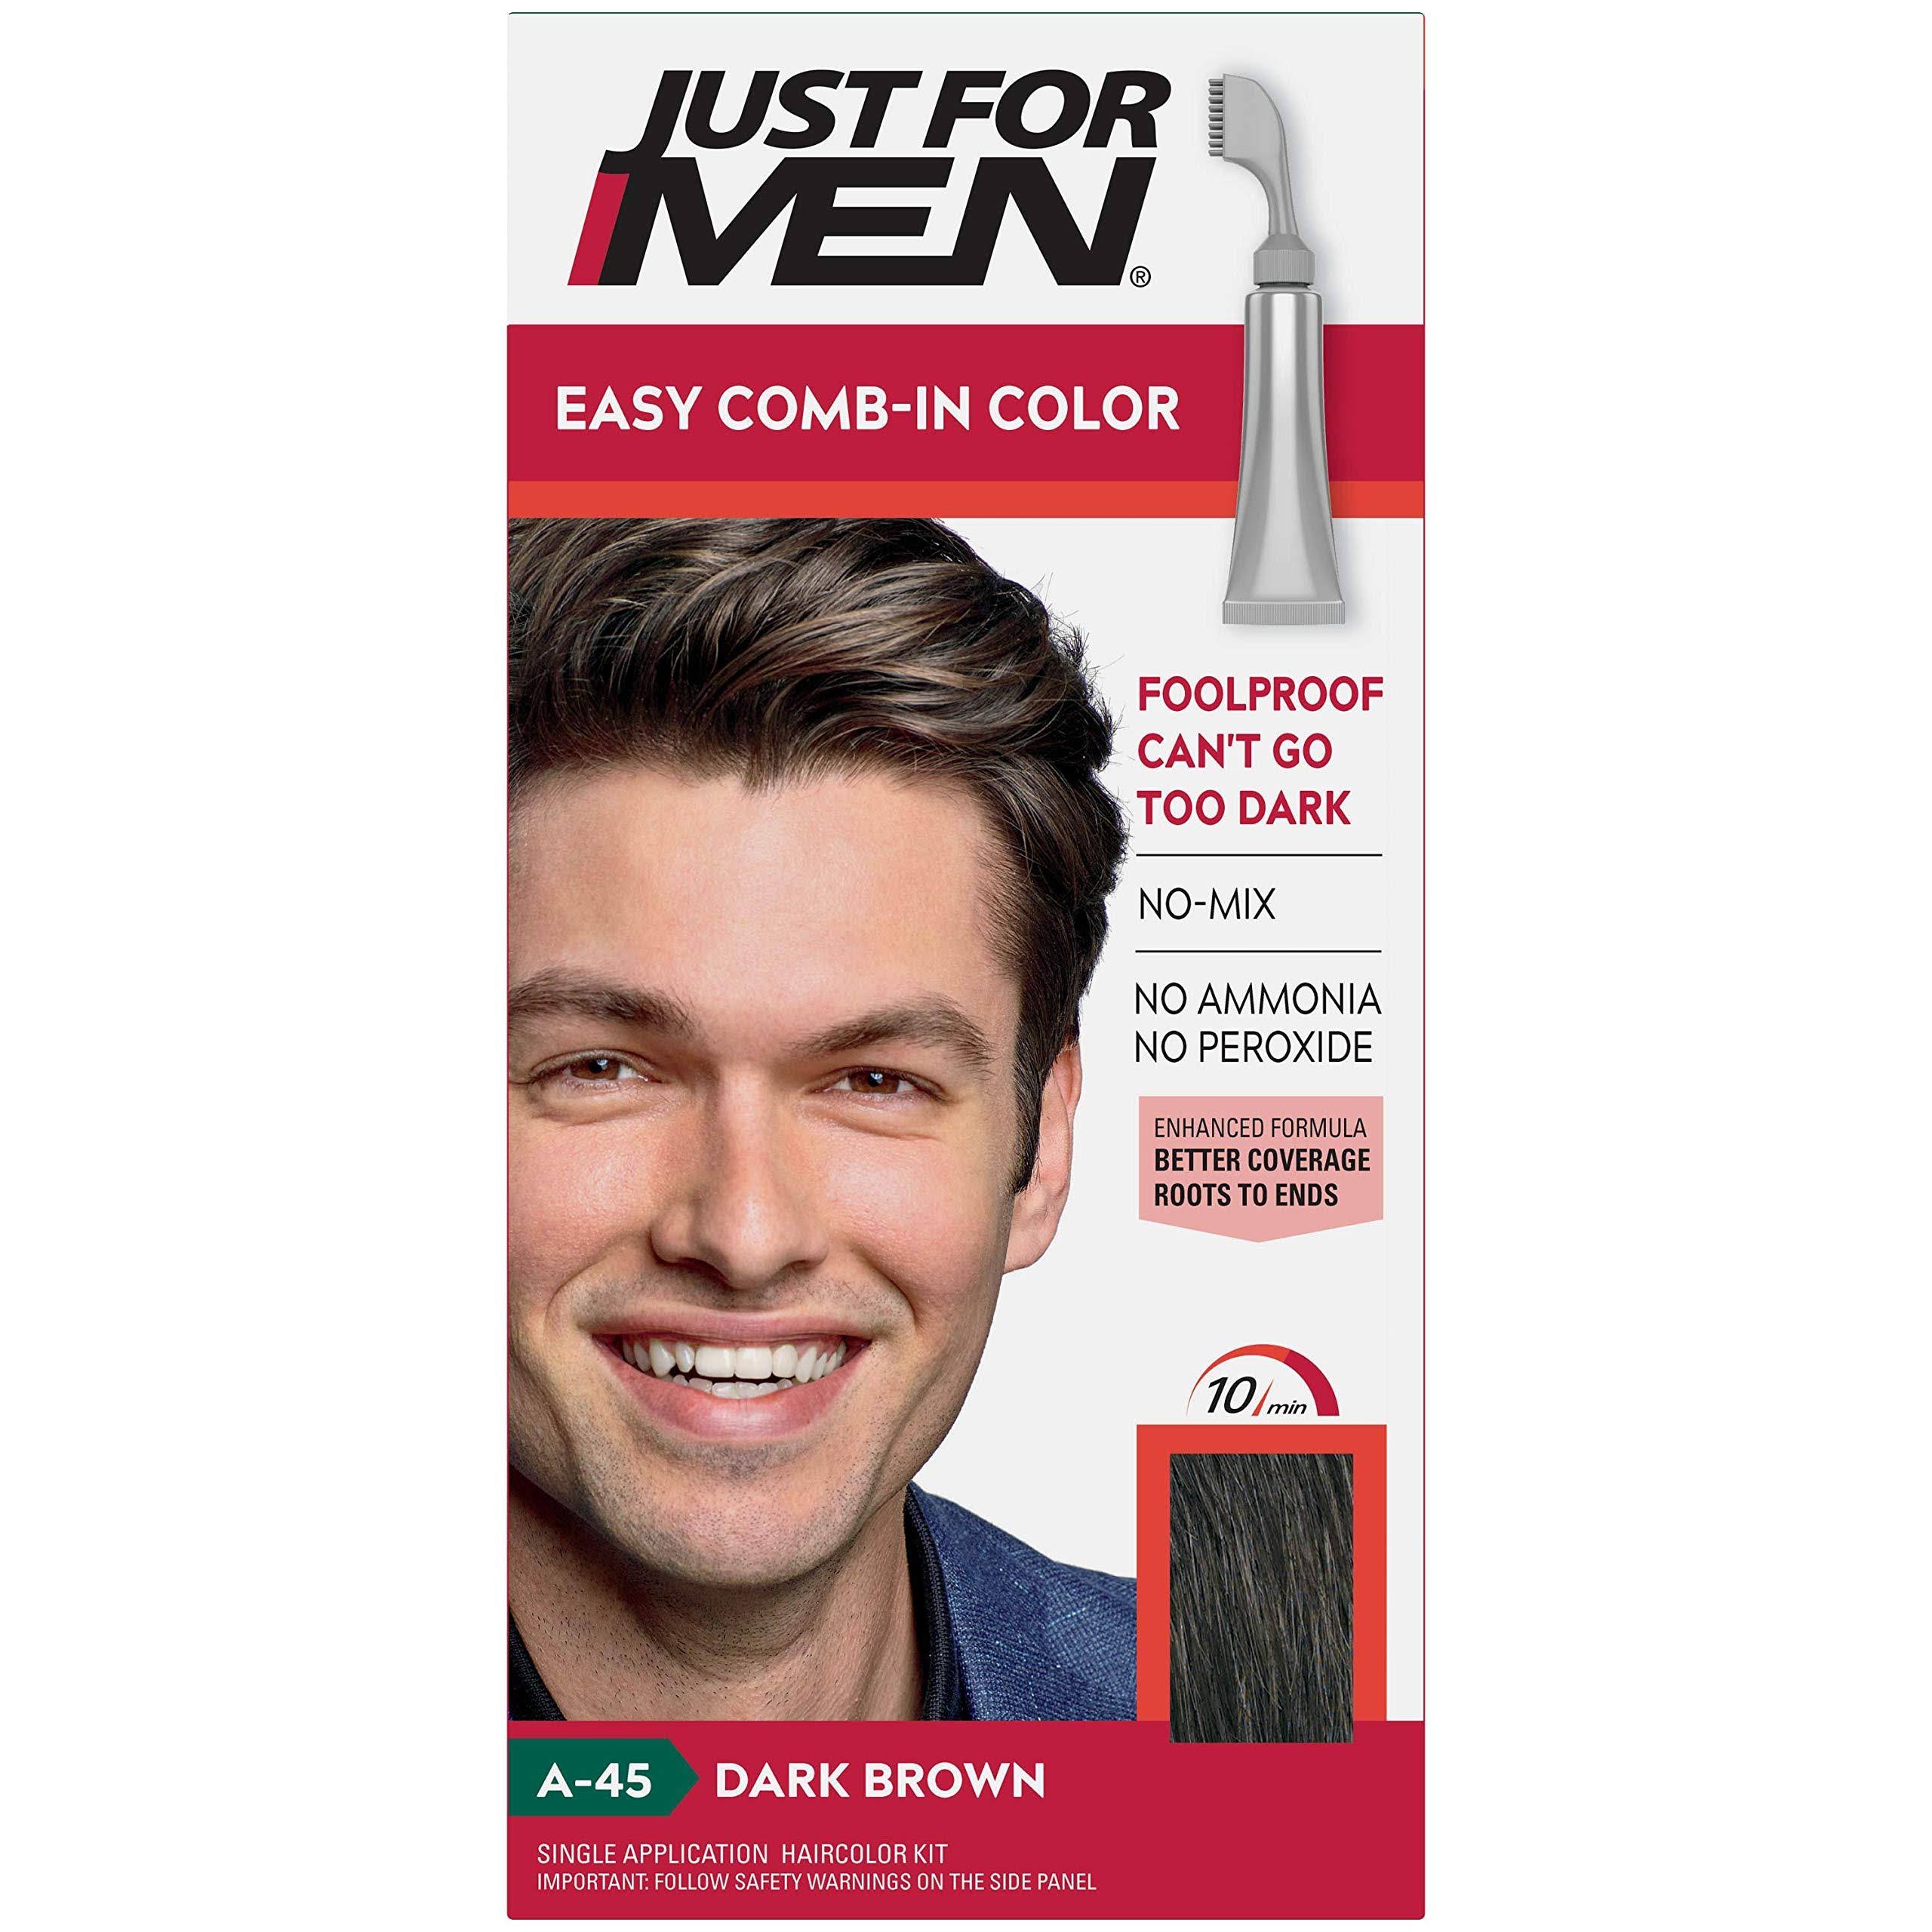 Just For Men Autostop Formula Hair Color - Dark Brown, 1.2oz